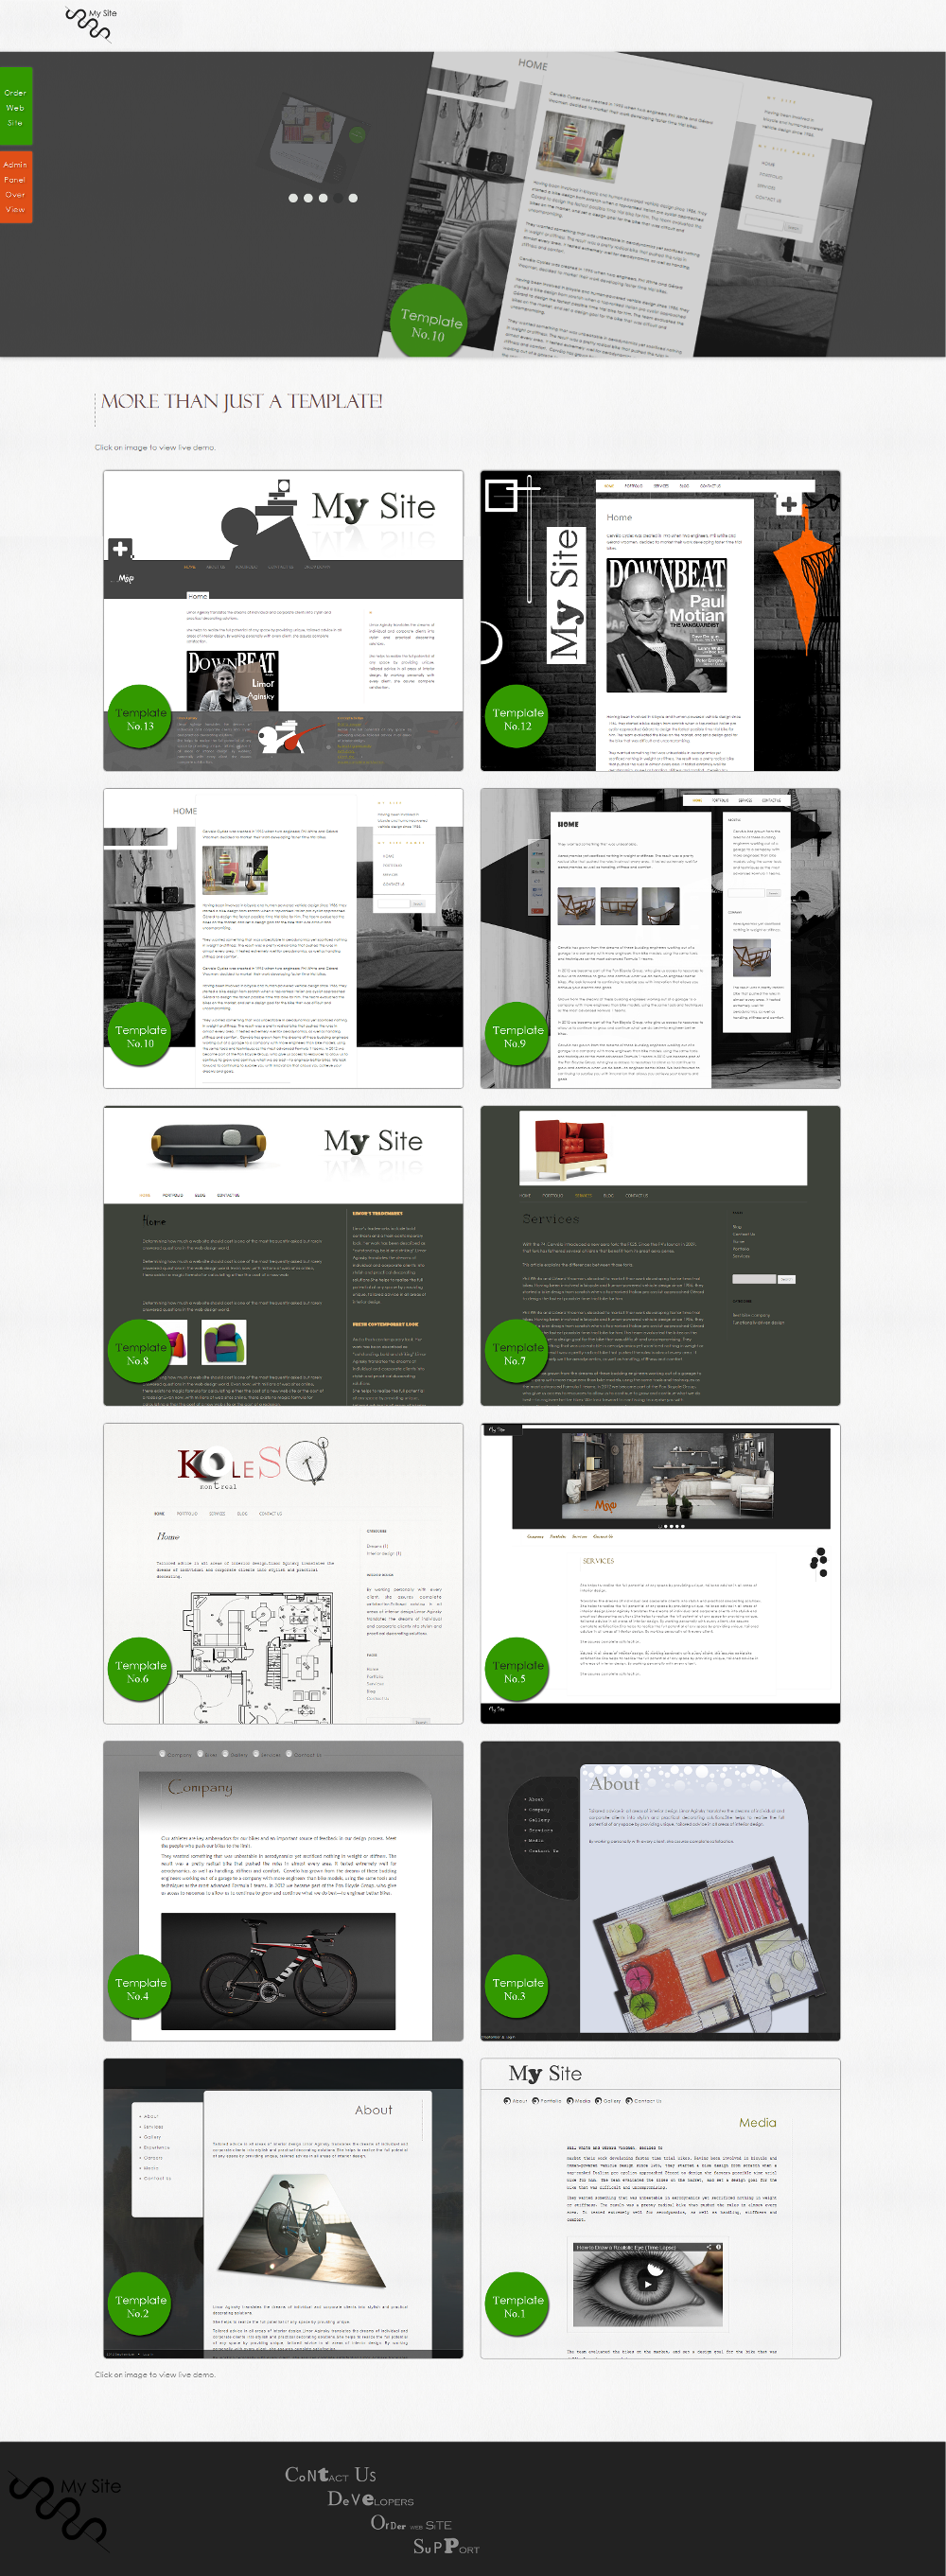 Version no.1 of Web Talk To site design